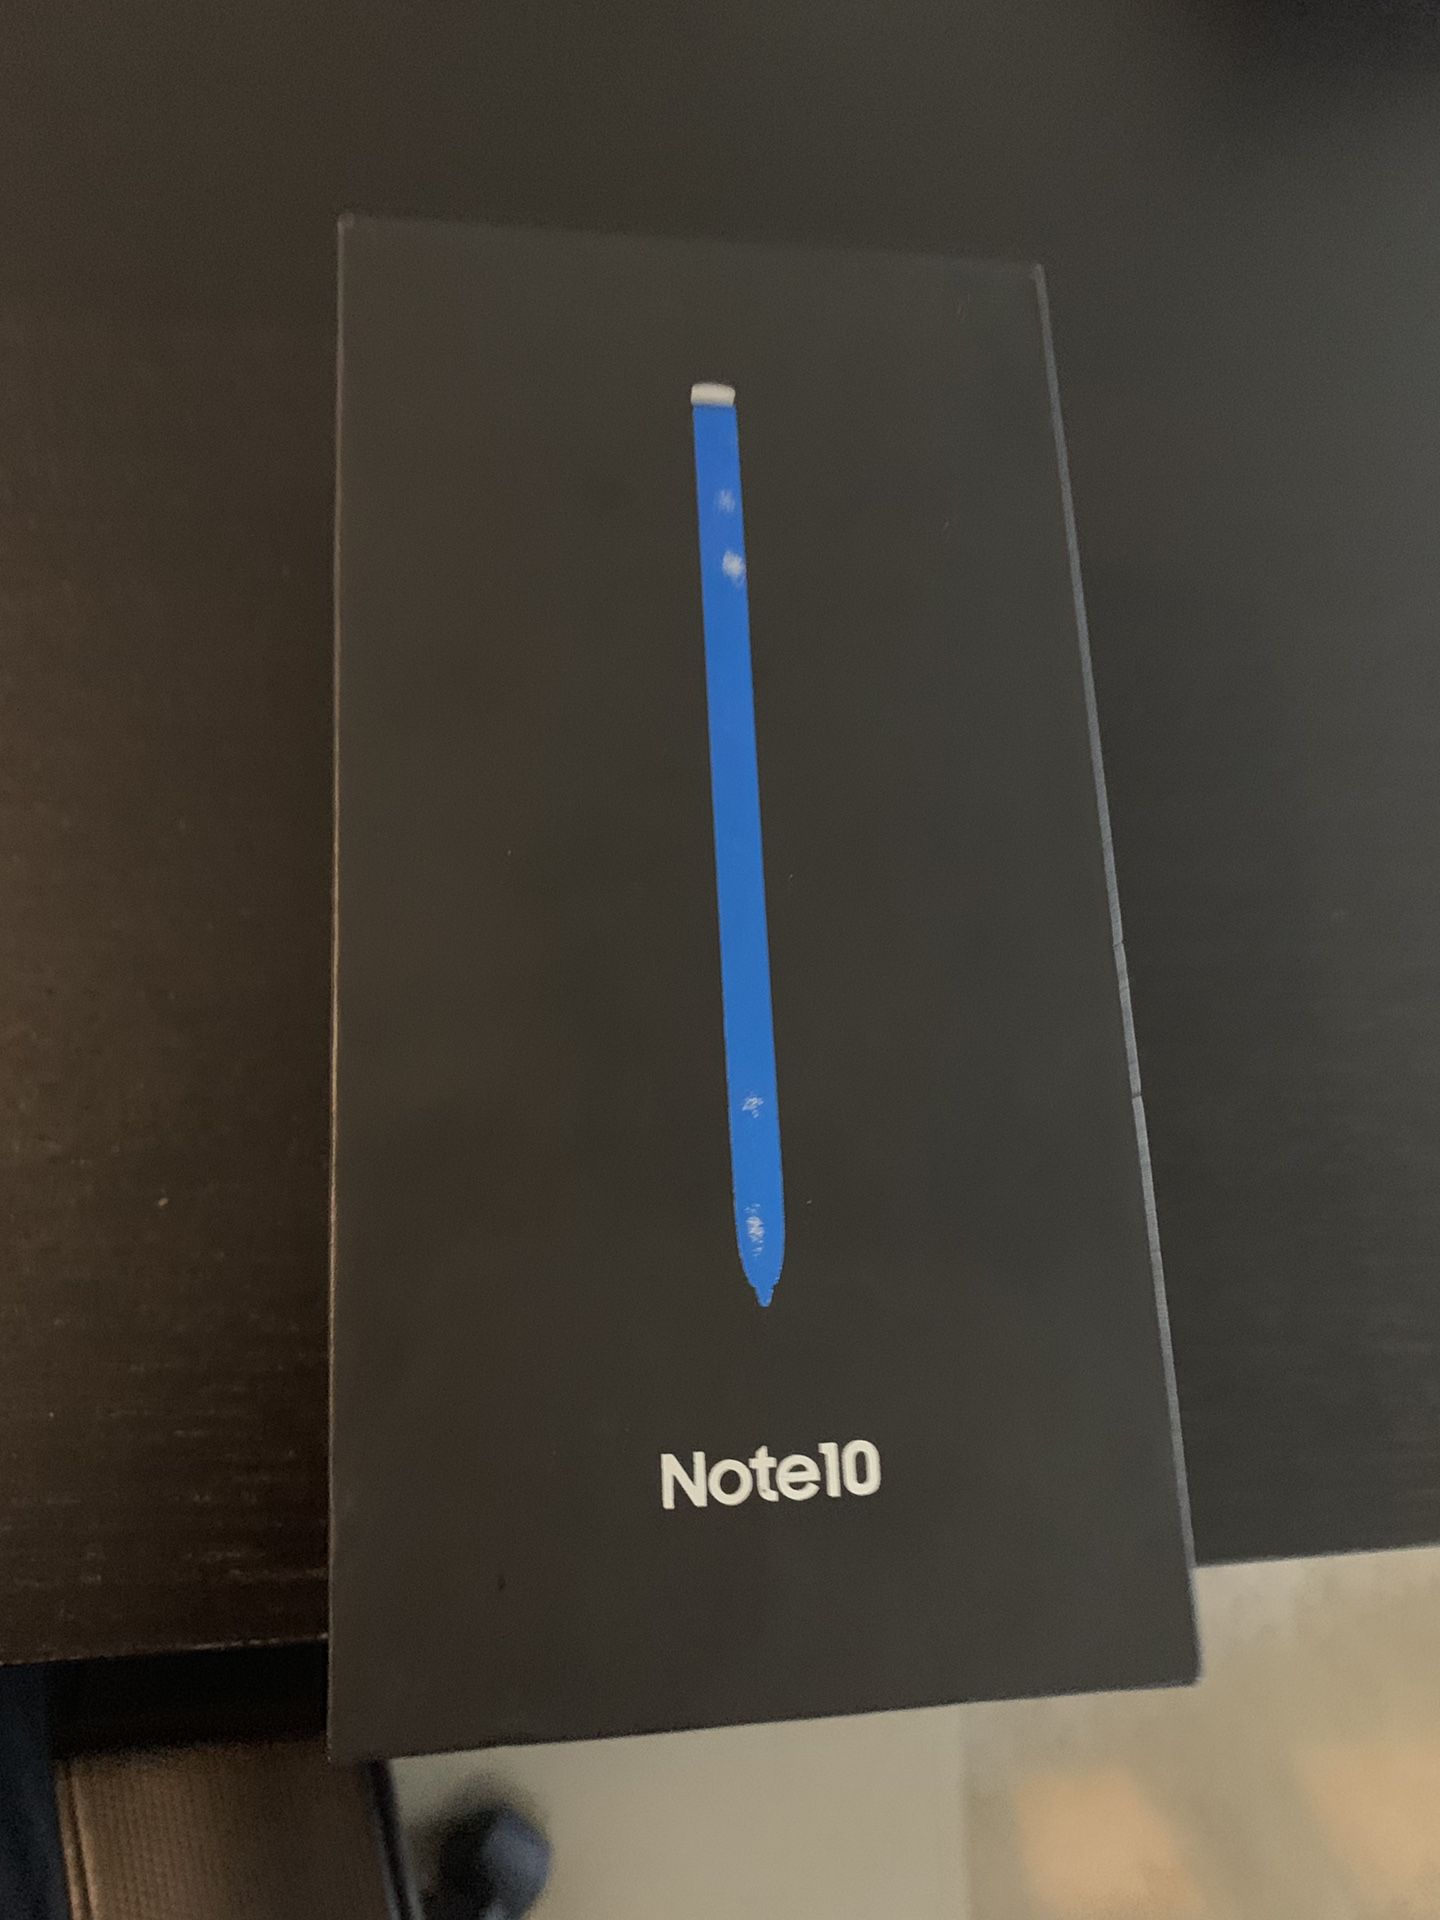 Samsung Galaxy note 10 sprint seeks in box 256GB